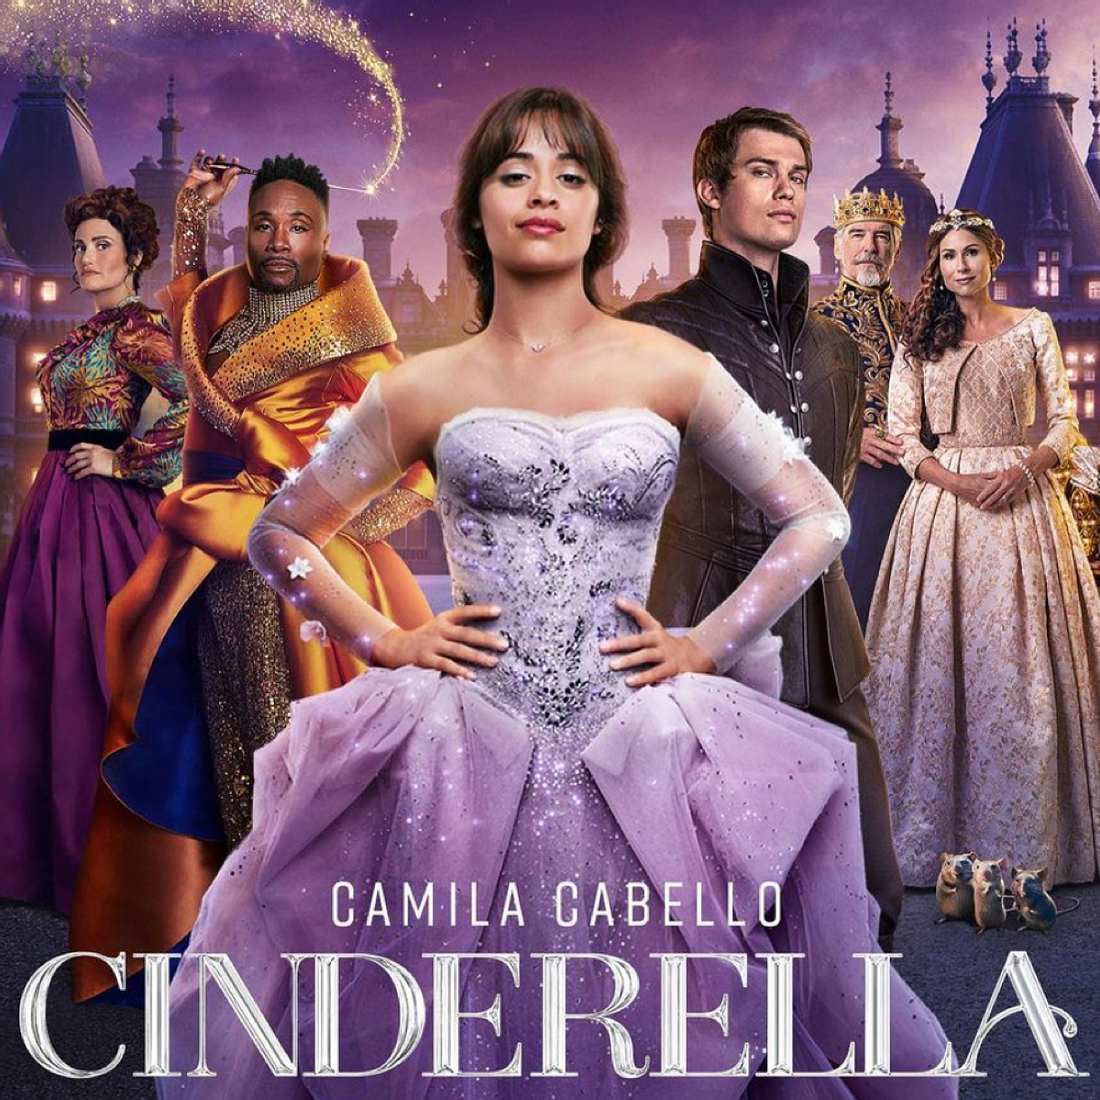 Camila Cabello als Cinderella: Kein Happy End mit ihm?